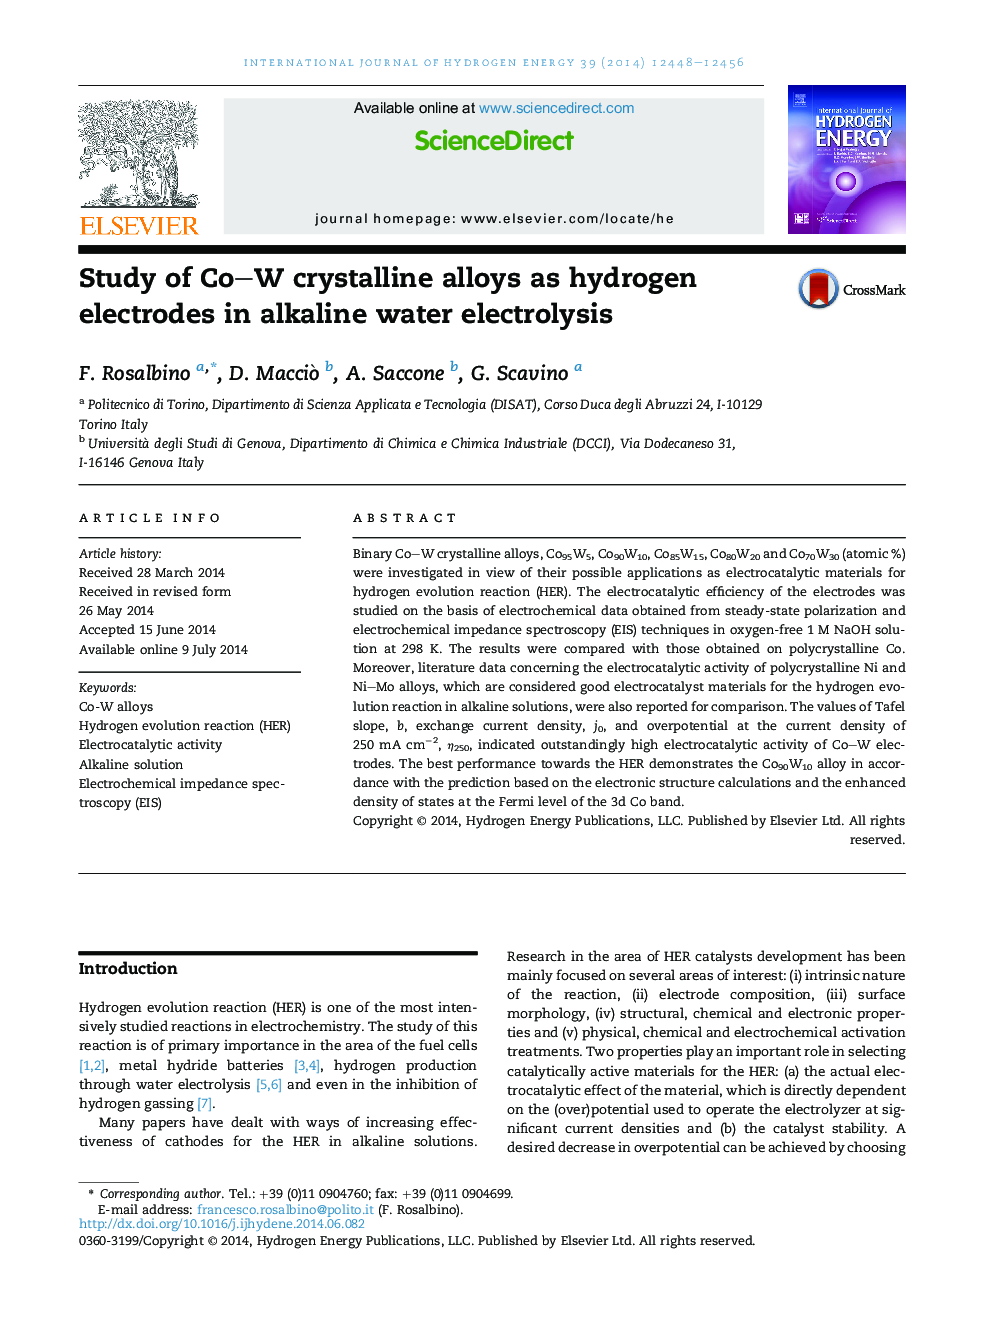 Study of Co-W crystalline alloys as hydrogen electrodes in alkaline water electrolysis